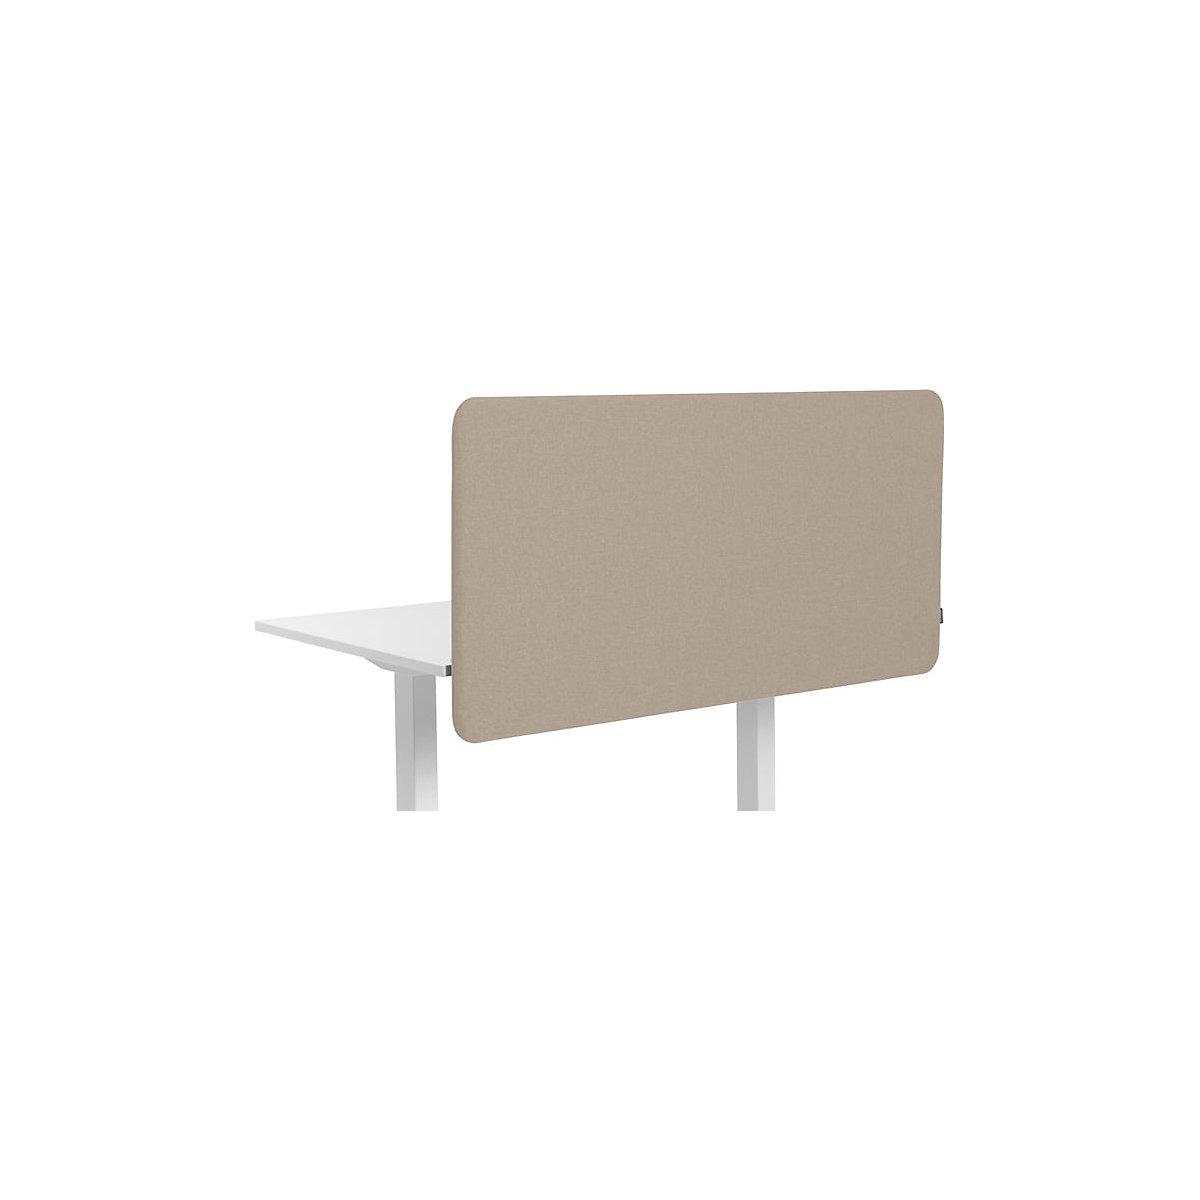 Softline Salsa acoustic desk partition, suspended downwards, HxW 650 x 1200 mm, fabric, beige-5